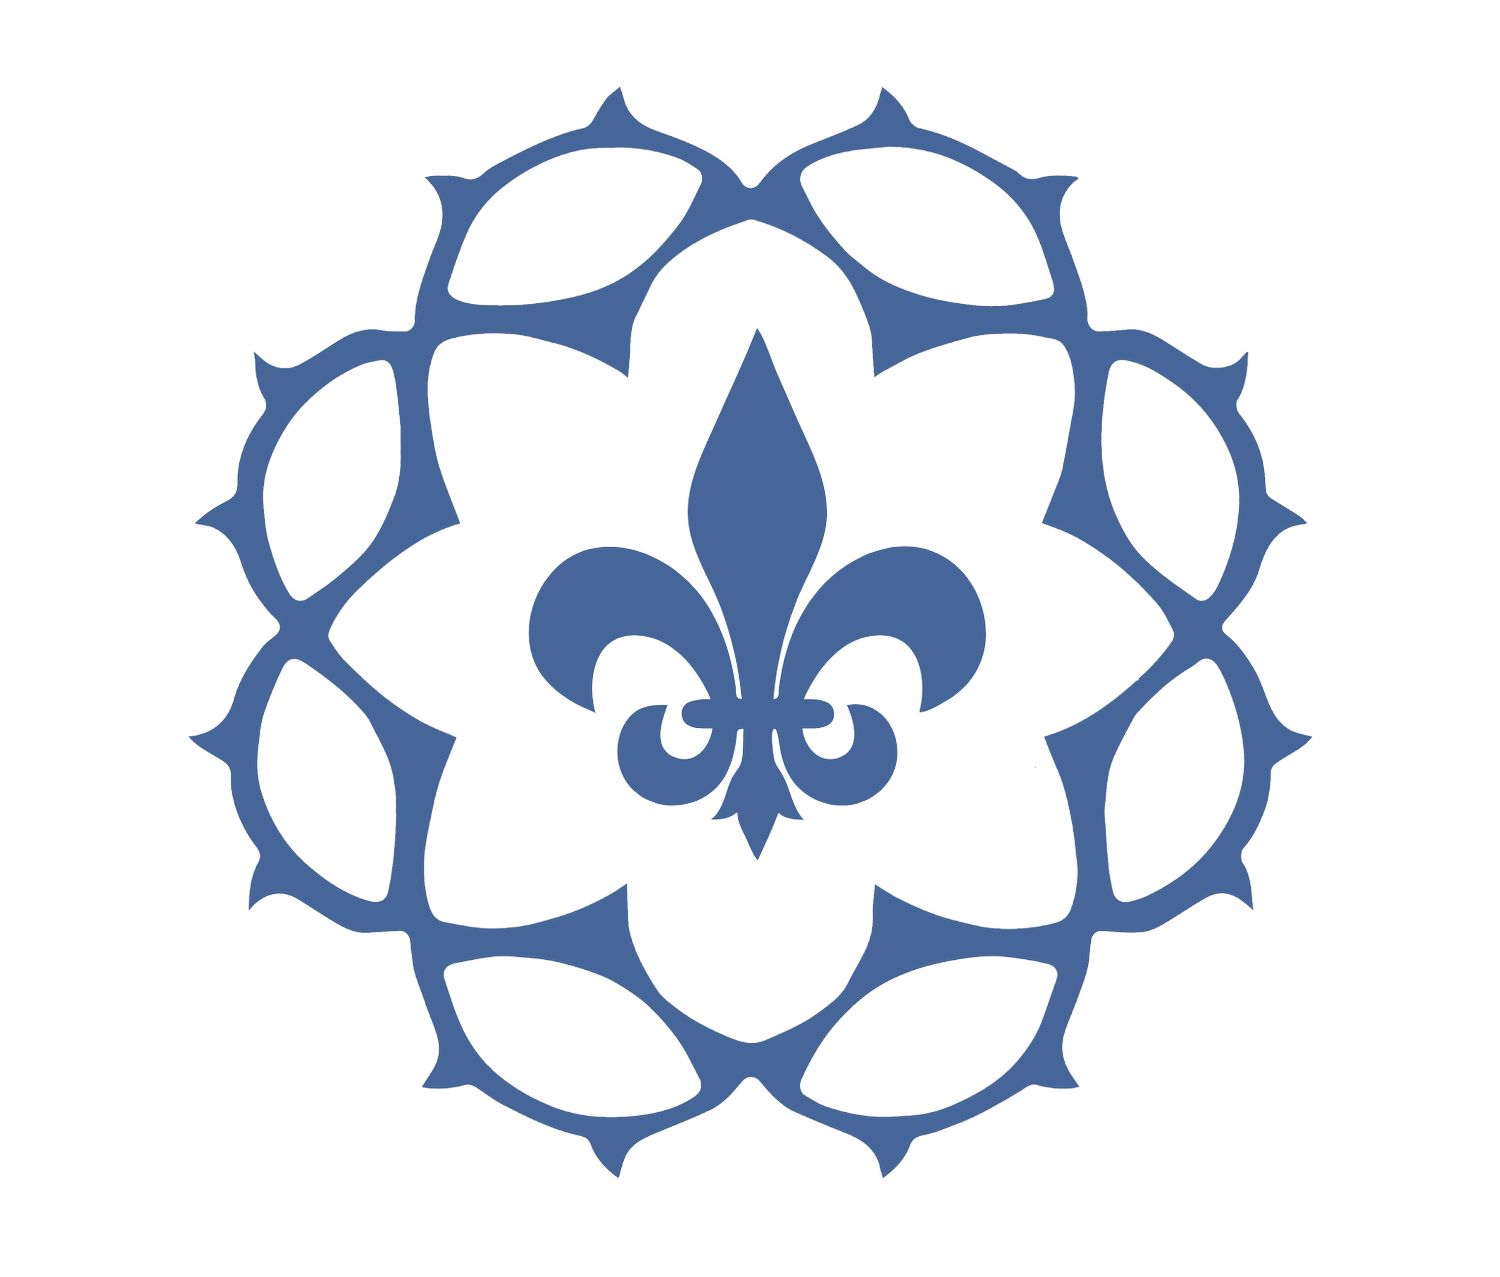 The St. Louis IX Art Society